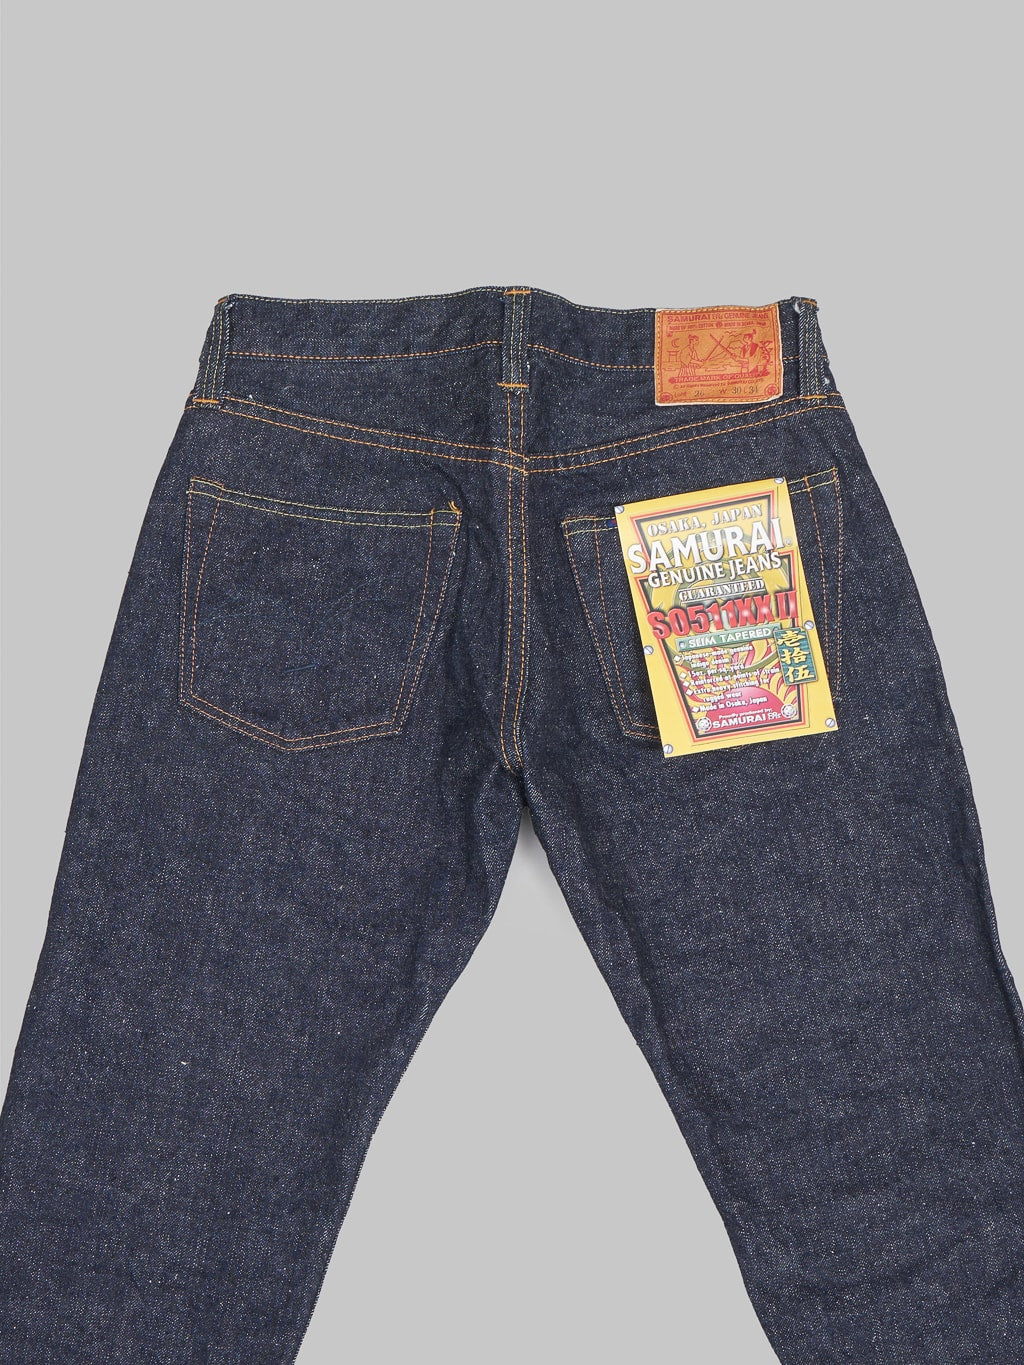 samurai s0511xxii texas cotton slim tapered jeans back pockets